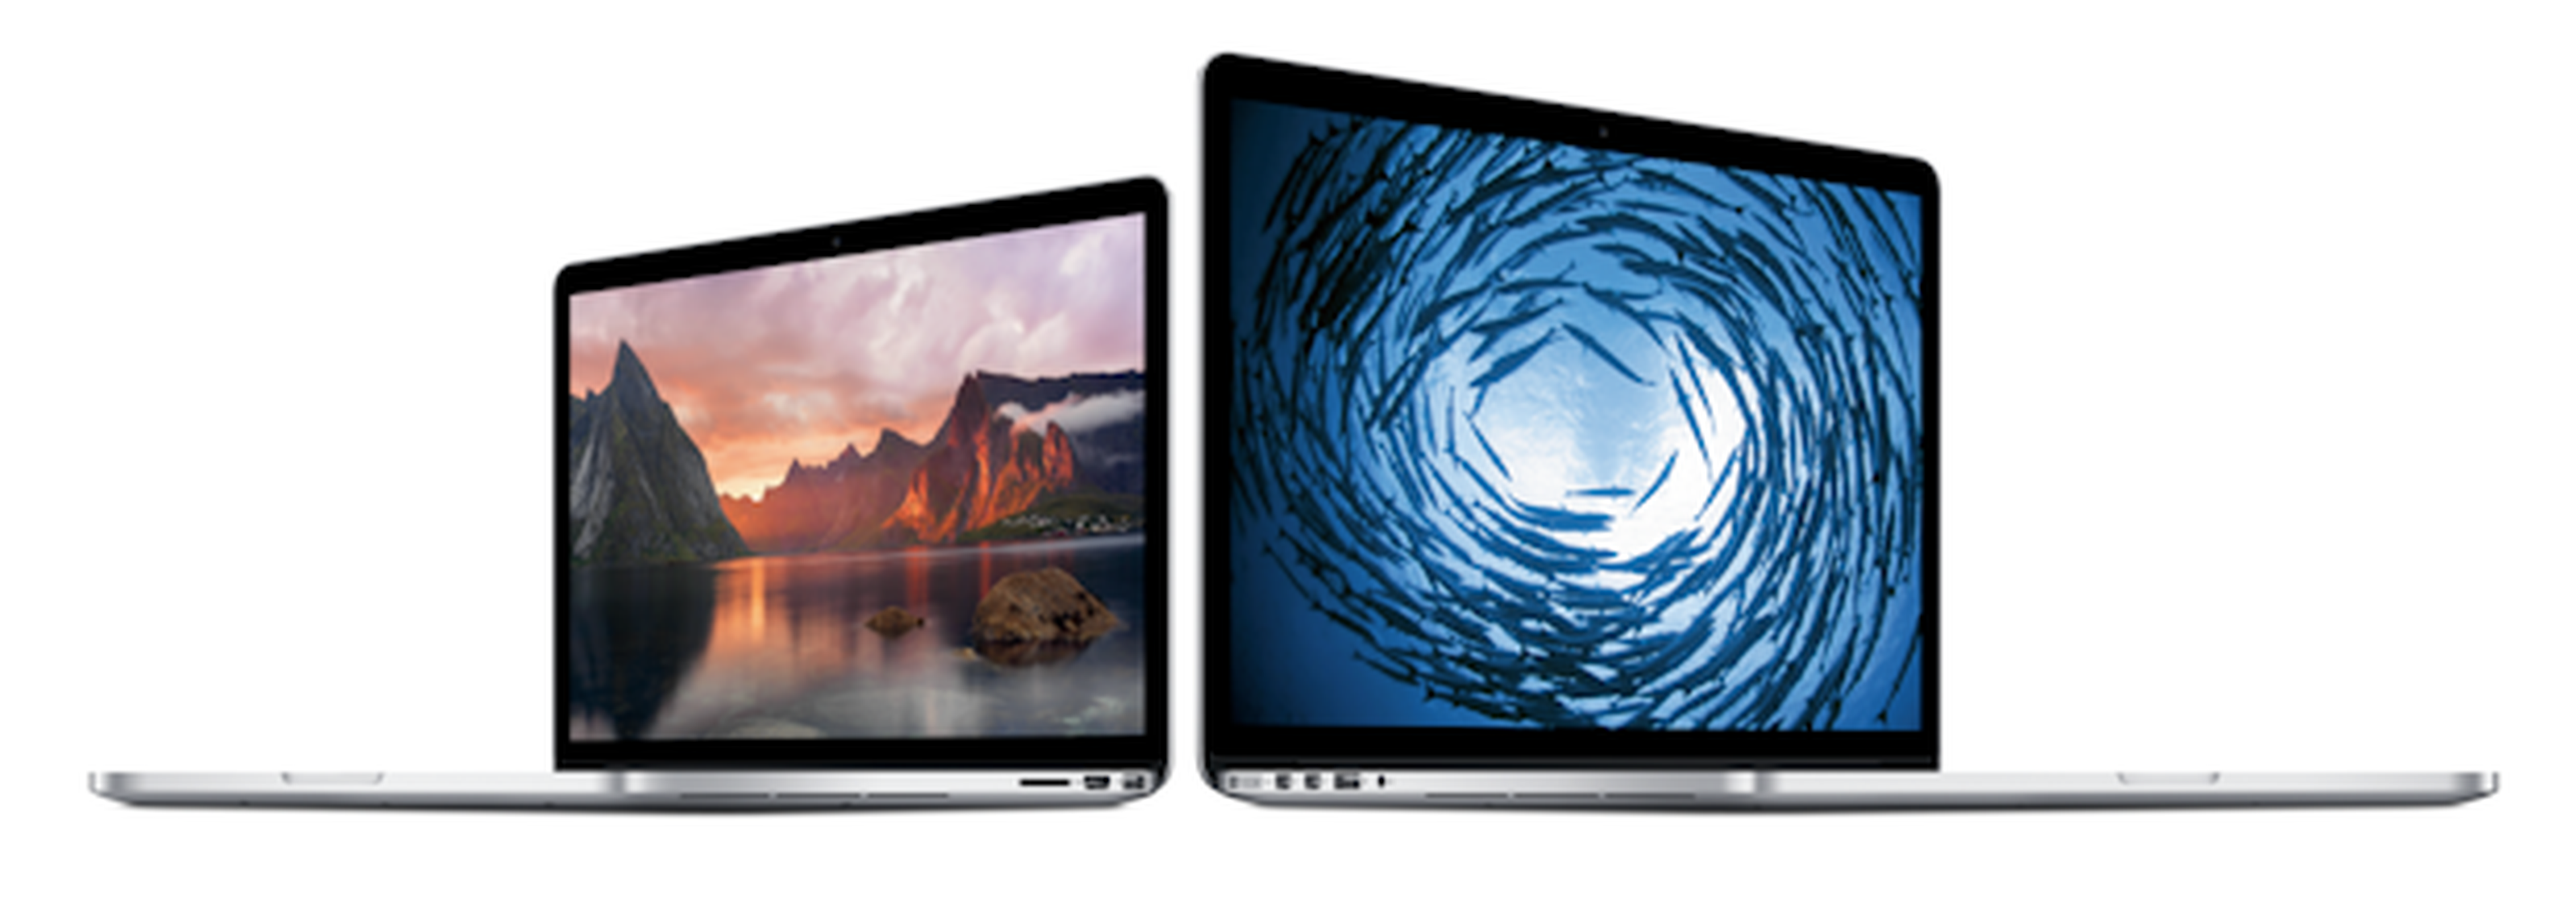 Apple MacBook Pro 13 Retina